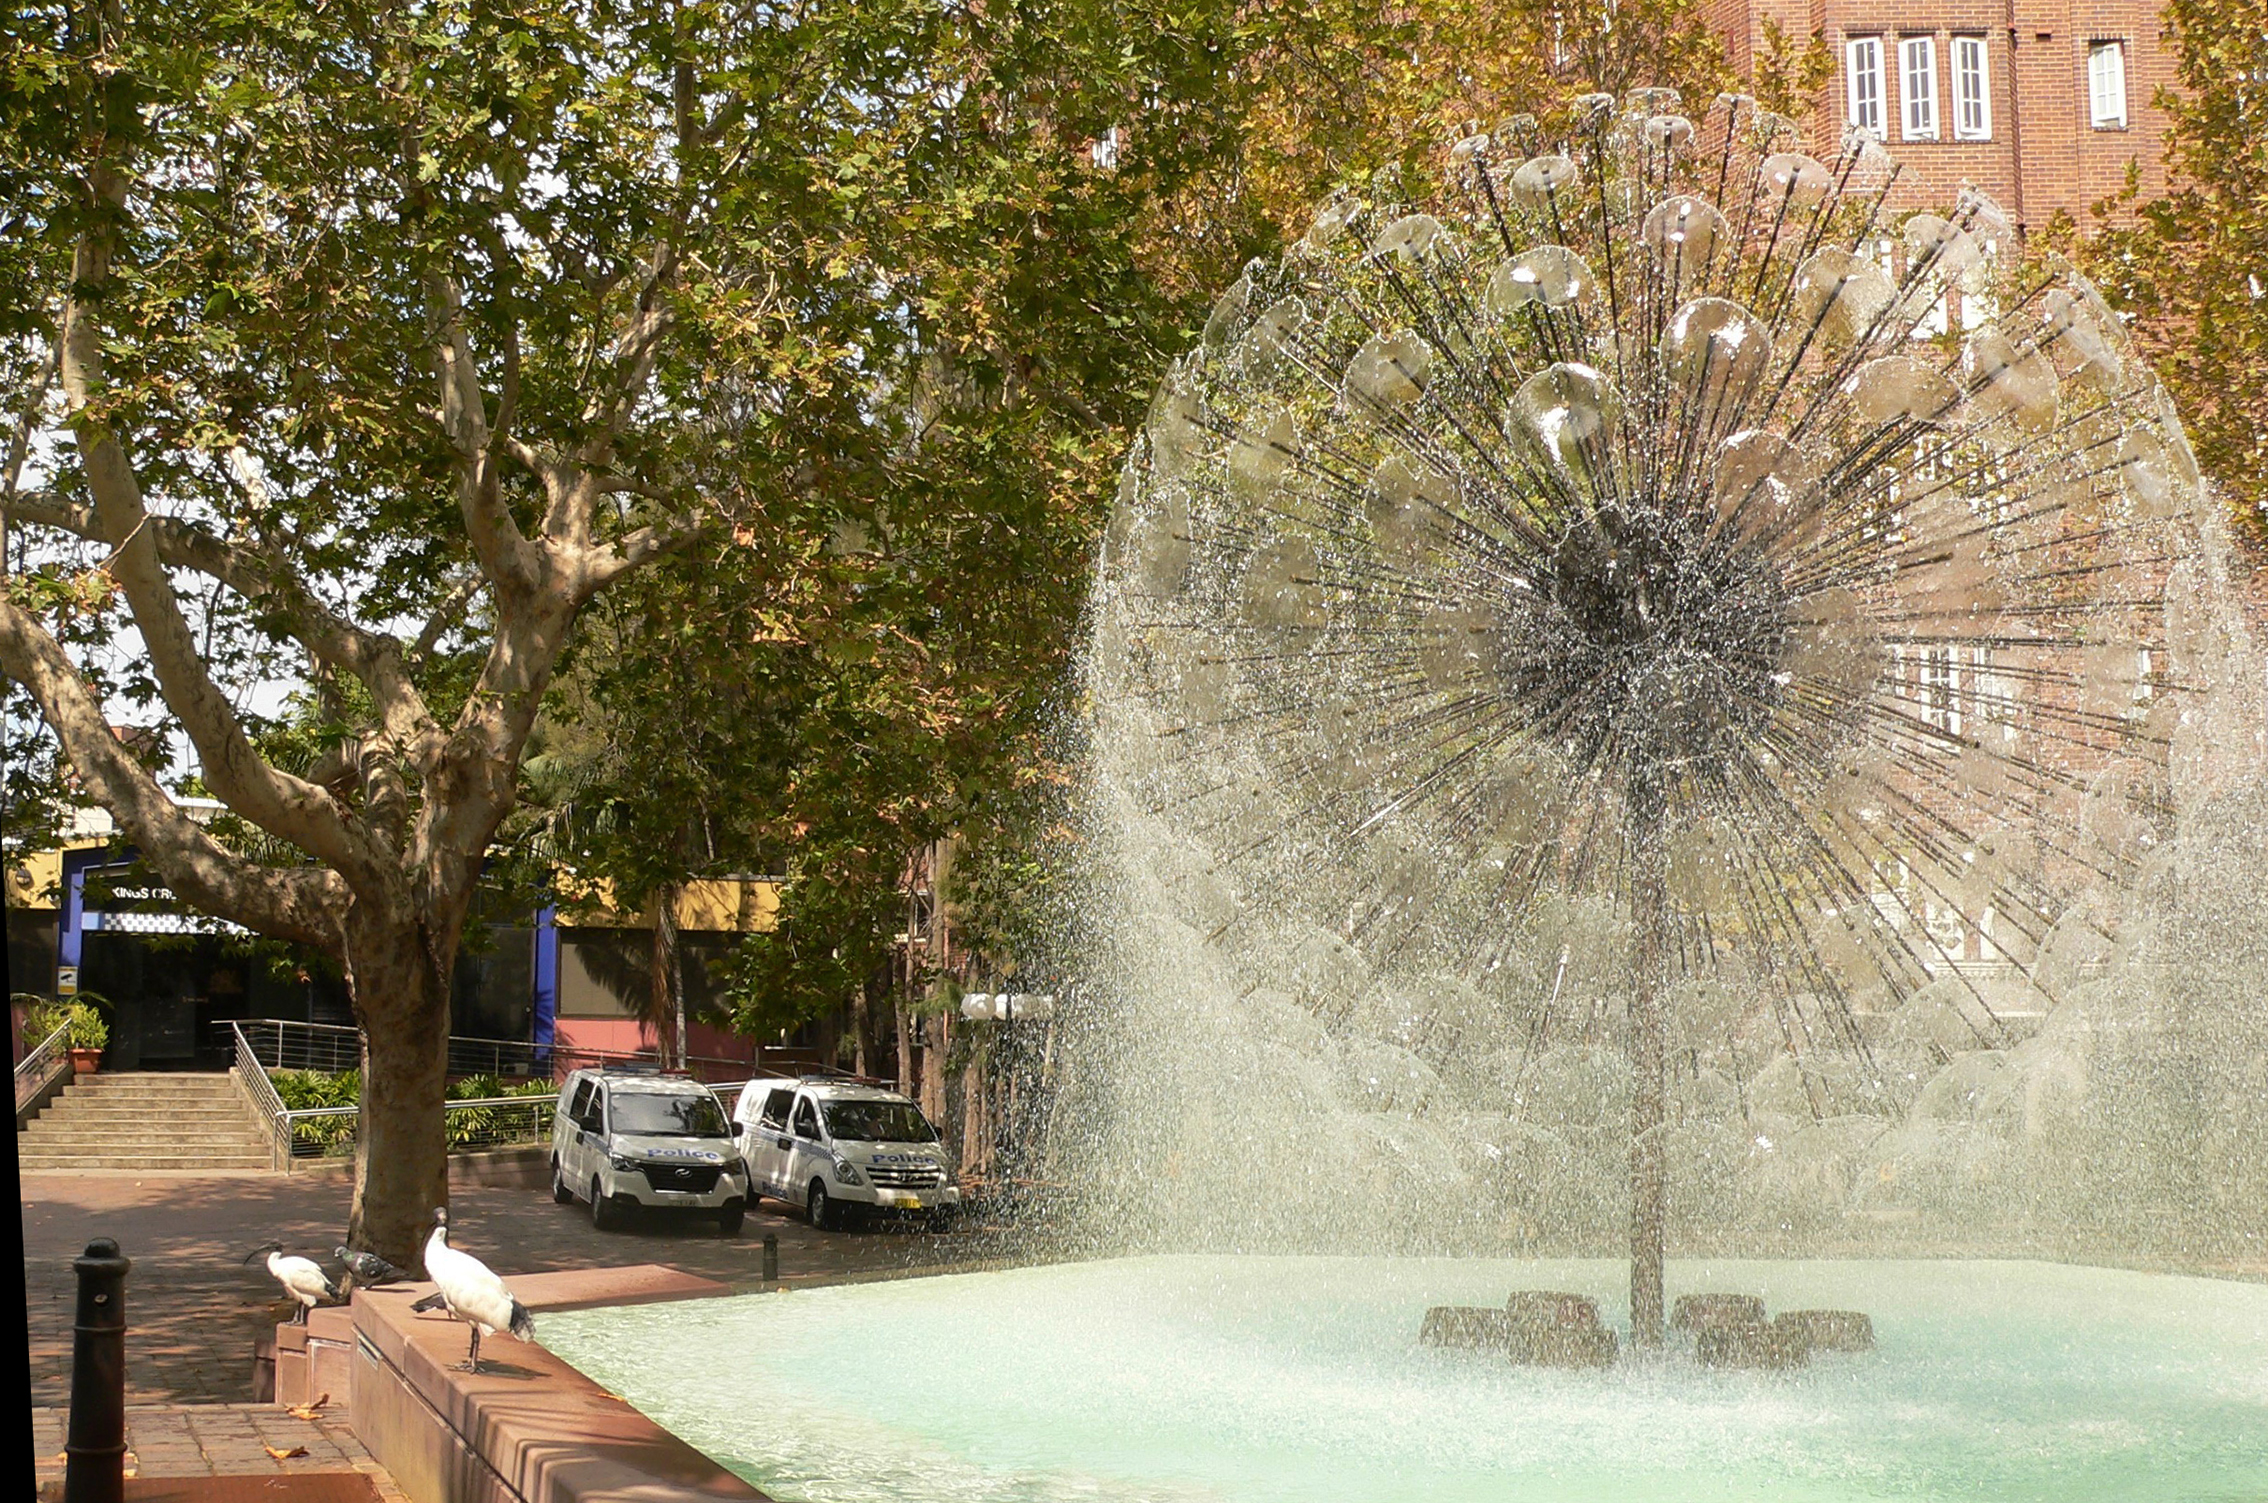 El-Alamein Memorial Fountain and plane trees.